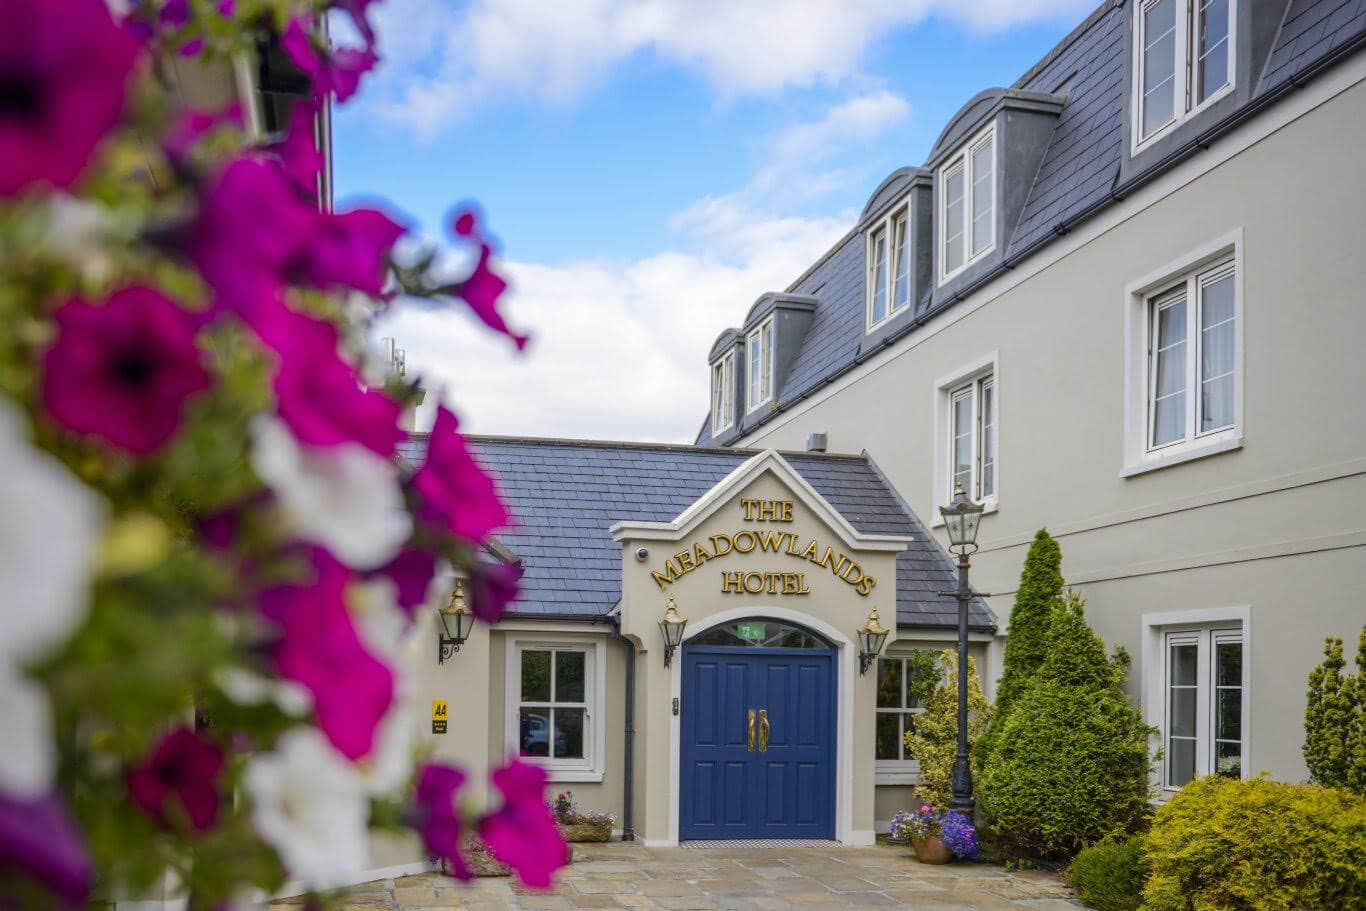 Meadowlands hotel in Tralee in County Kerry in Ireland